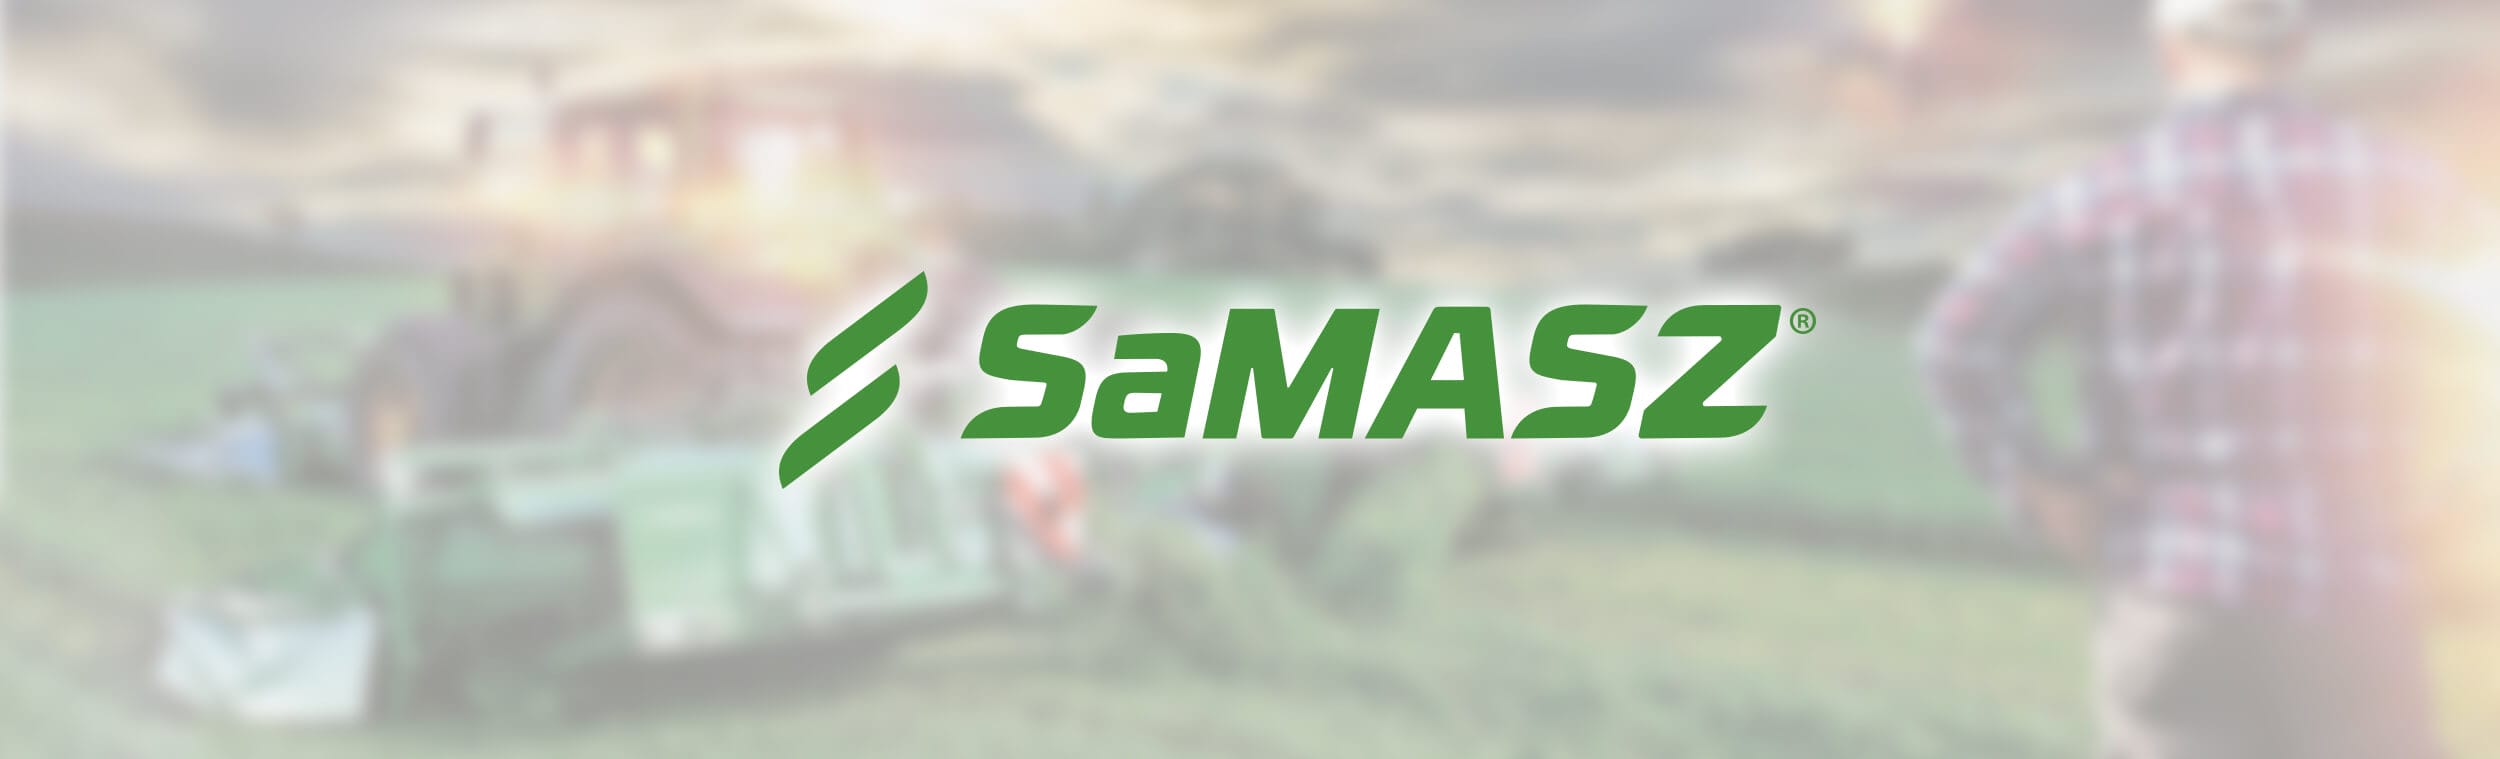 SaMASZ - Marketing Automation